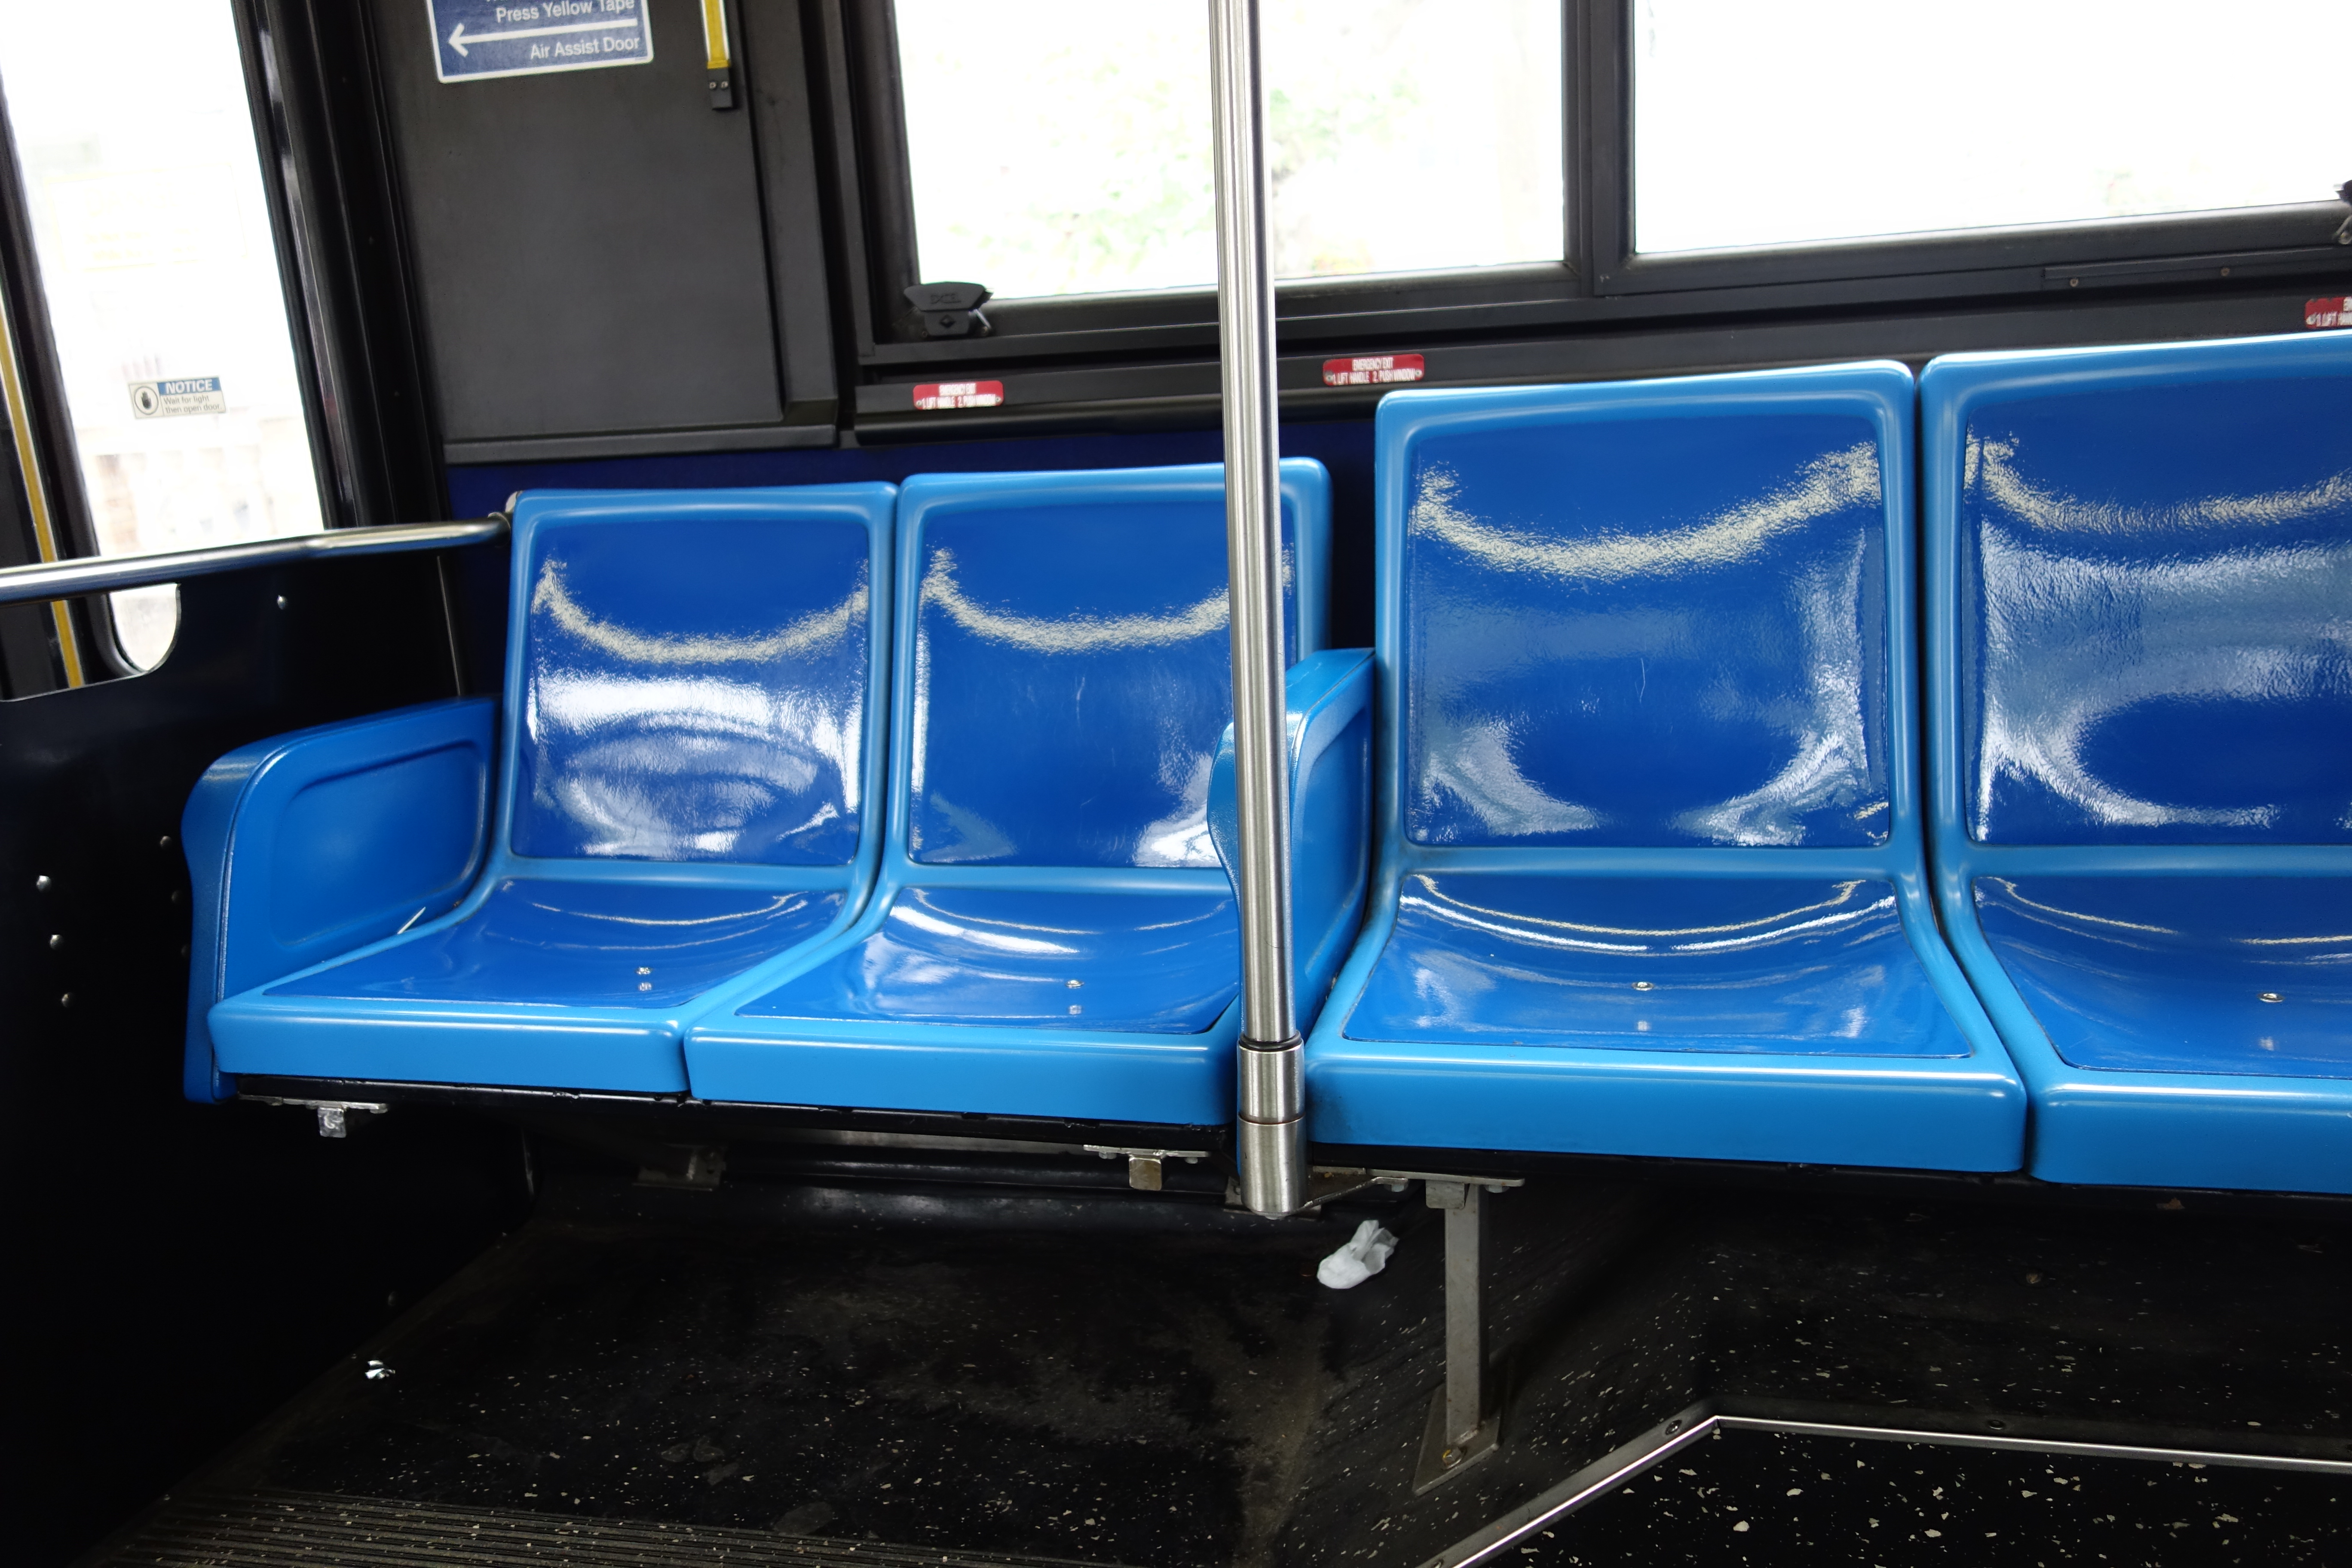 Bus seats